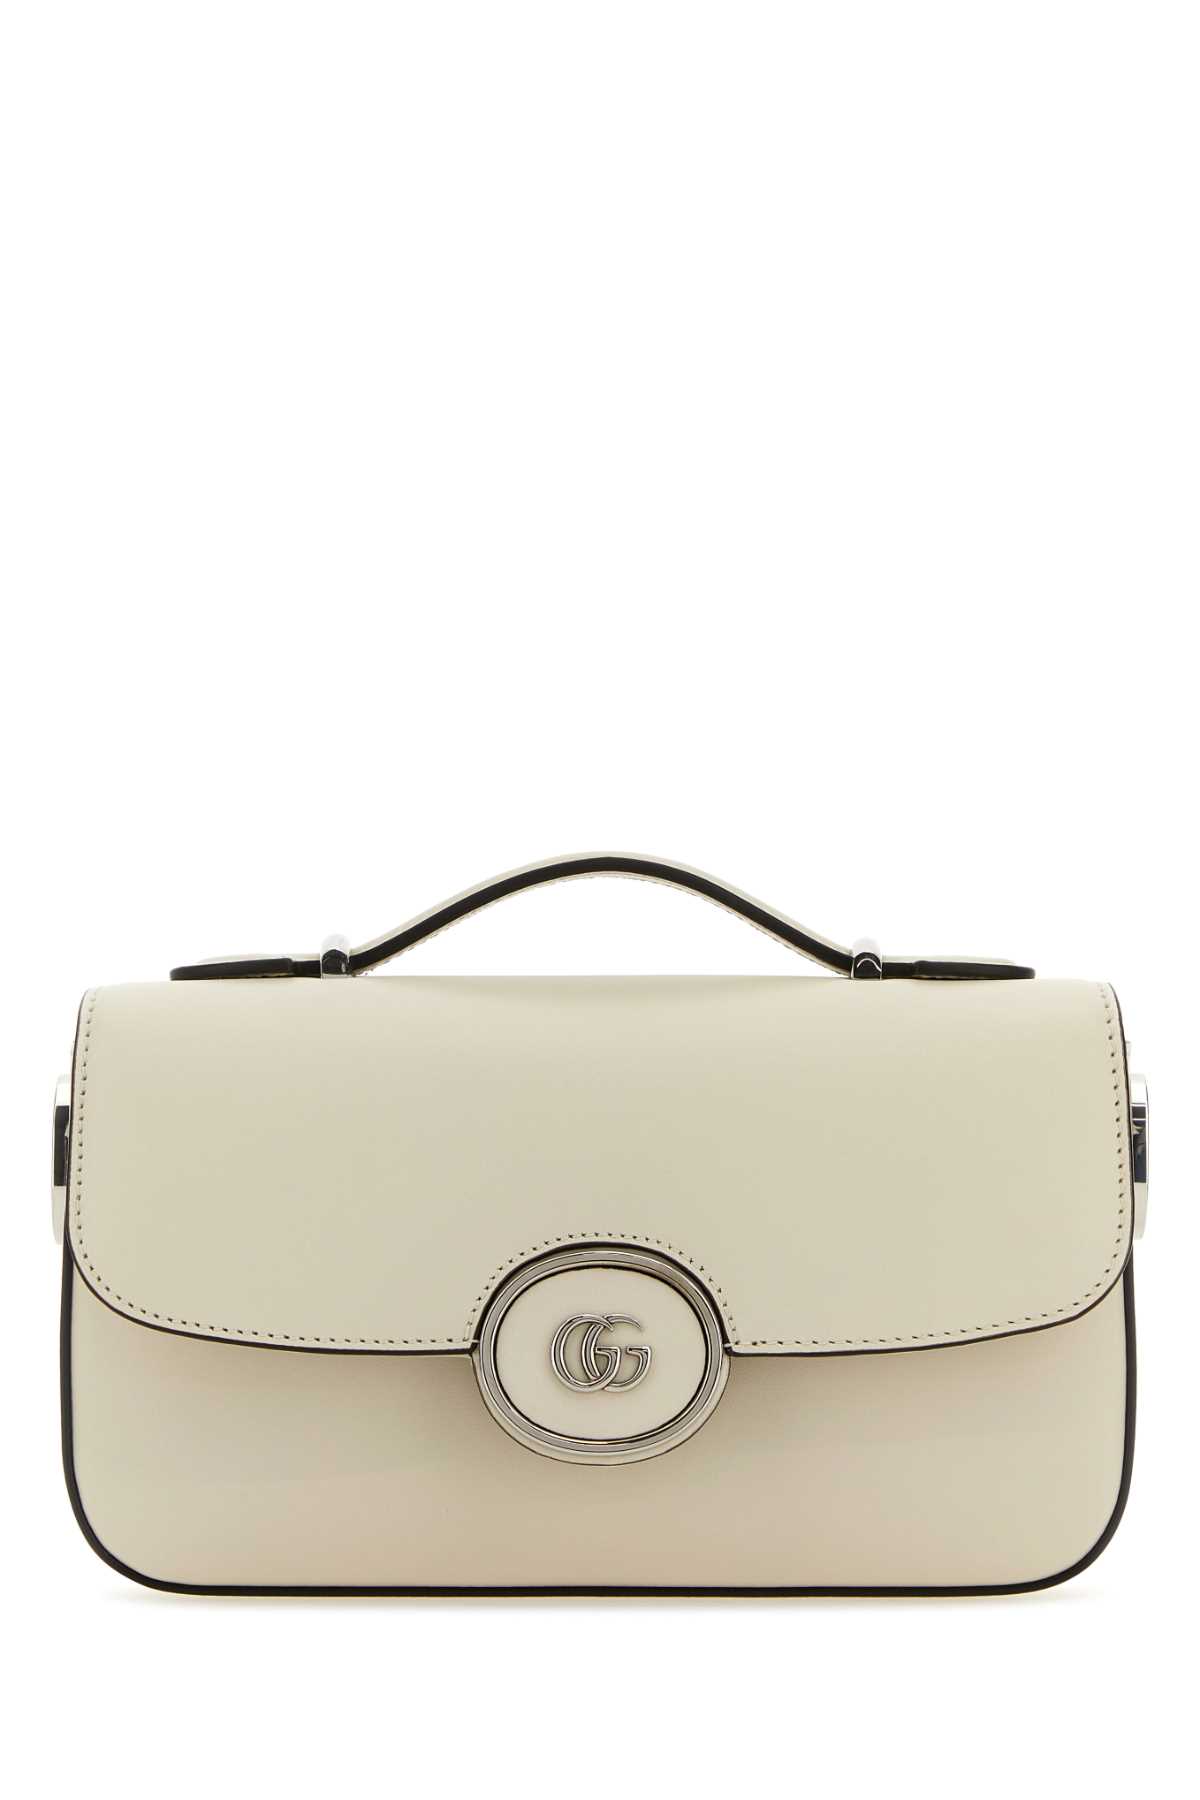 Ivory Leather Mini Petite Gg Handbag